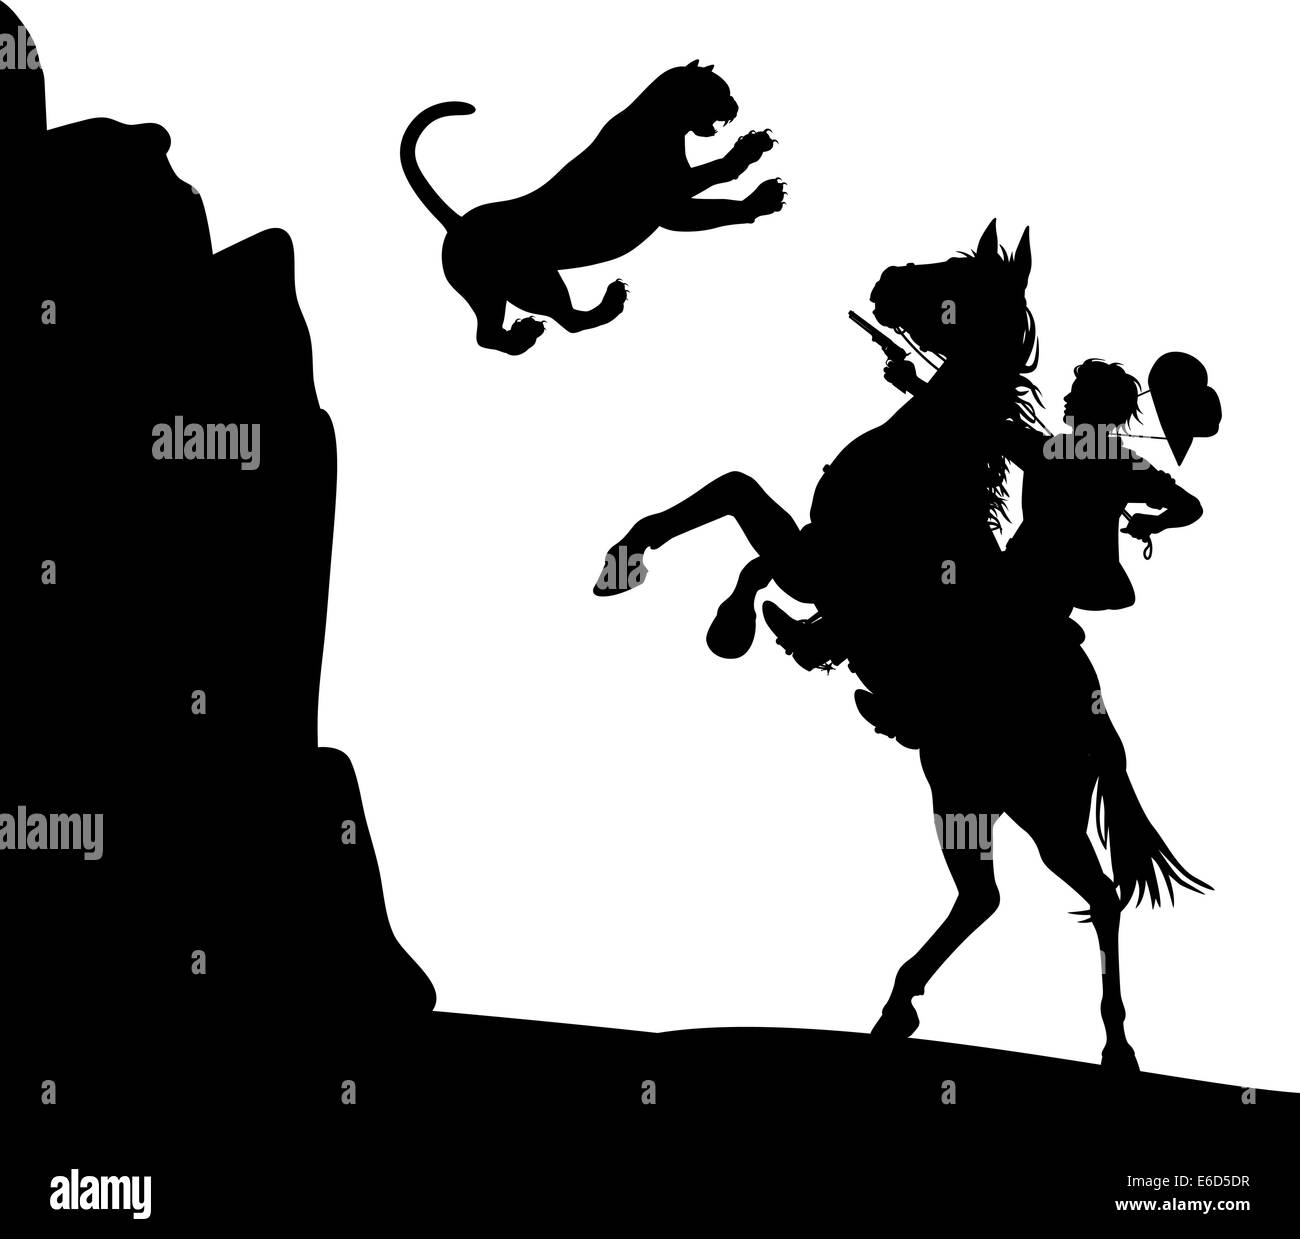 Editable vector illustration of a mountain lion jumping down at a cowboy on horseback Stock Vector